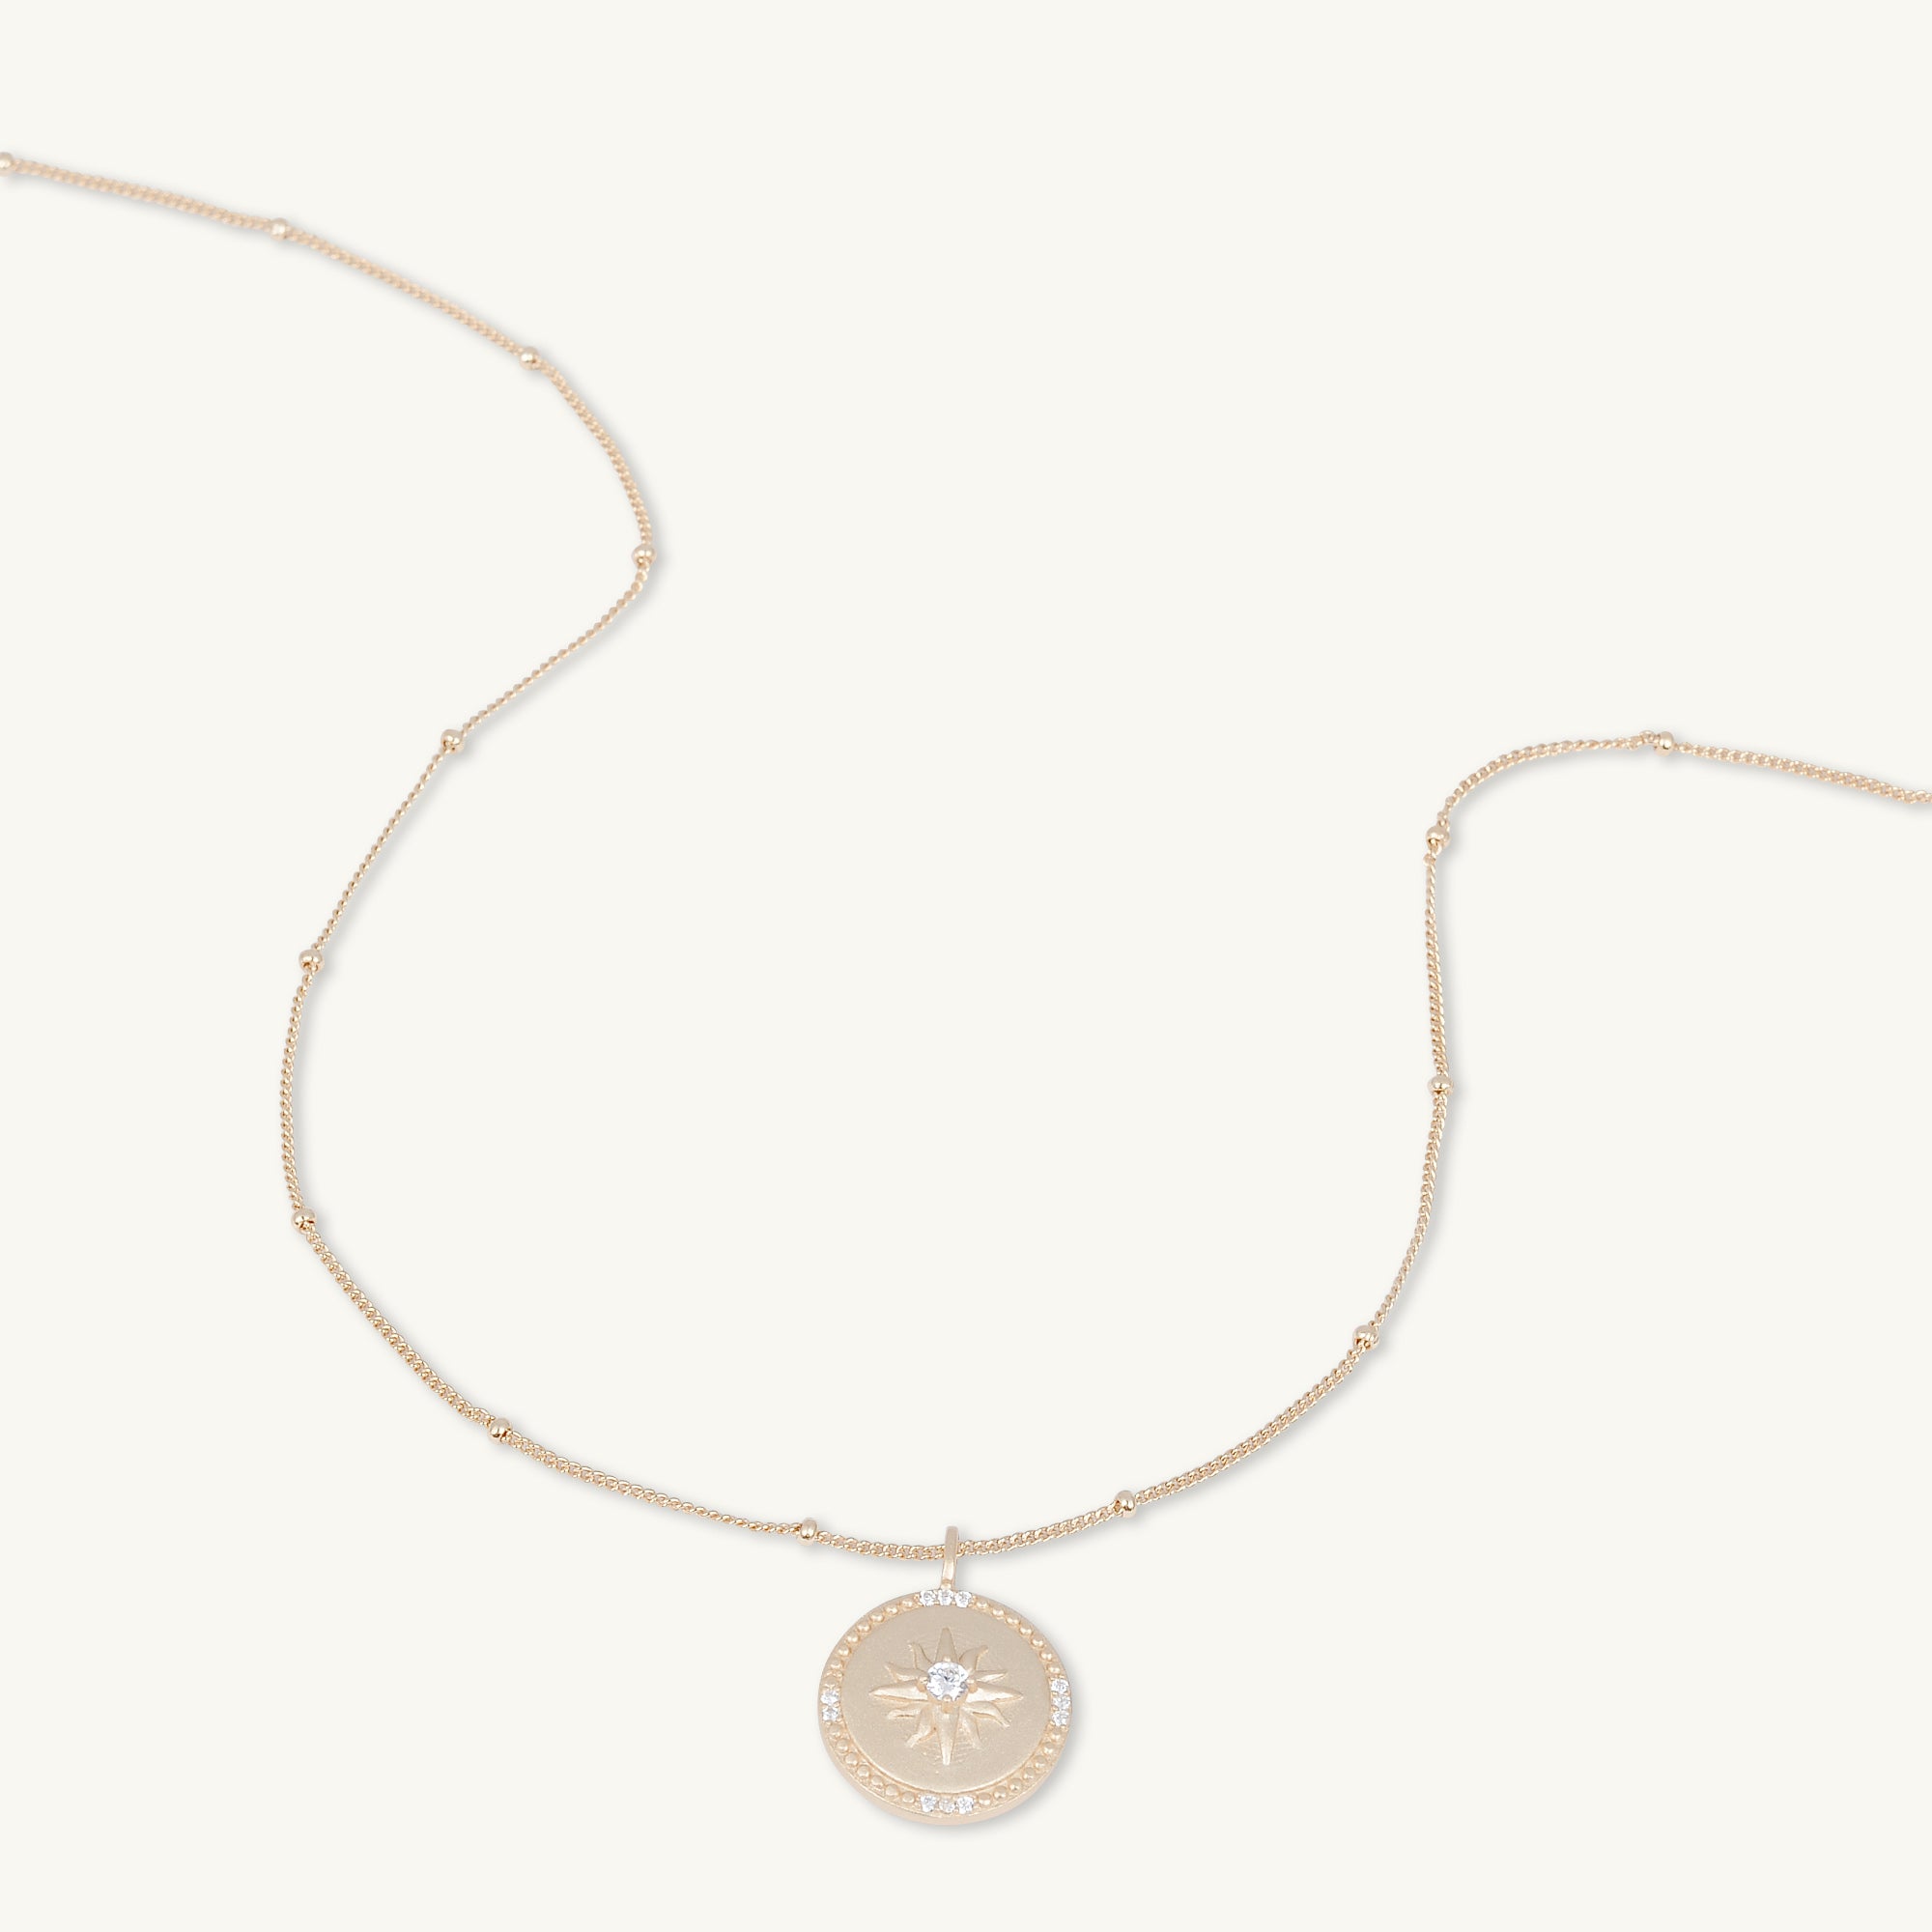 Celestial Sun Medallion Disc Necklace